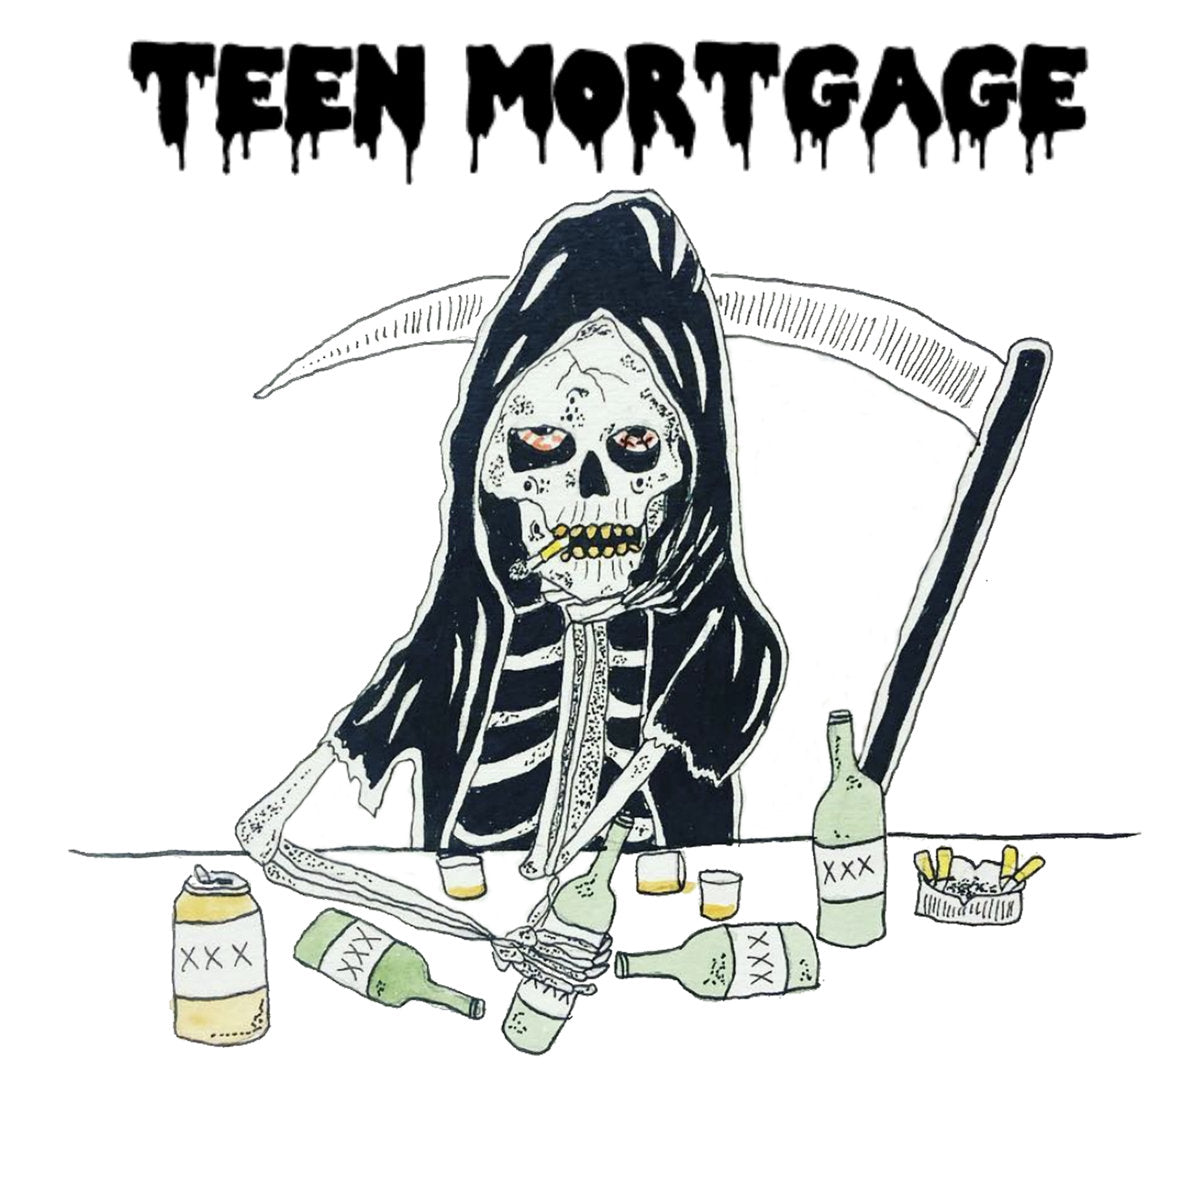 TEEN MORTGAGE "Teen Mortgage" LP